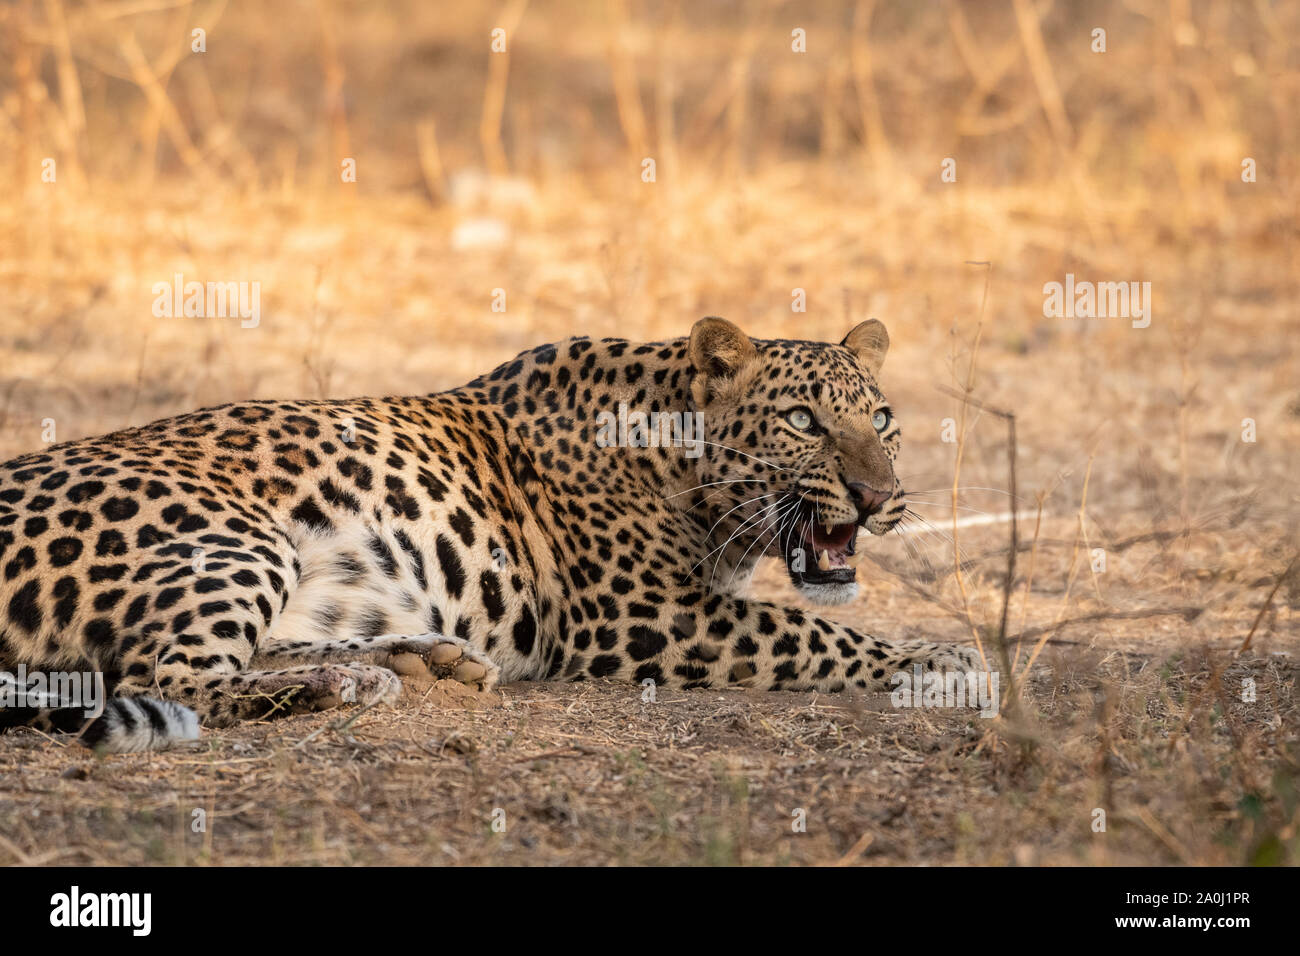 Maschio arrabbiato leopard con intensa espressioni aggressive a jhalana riserva forestale di Rajasthan Jaipur India - Panthera pardus fusca Foto Stock